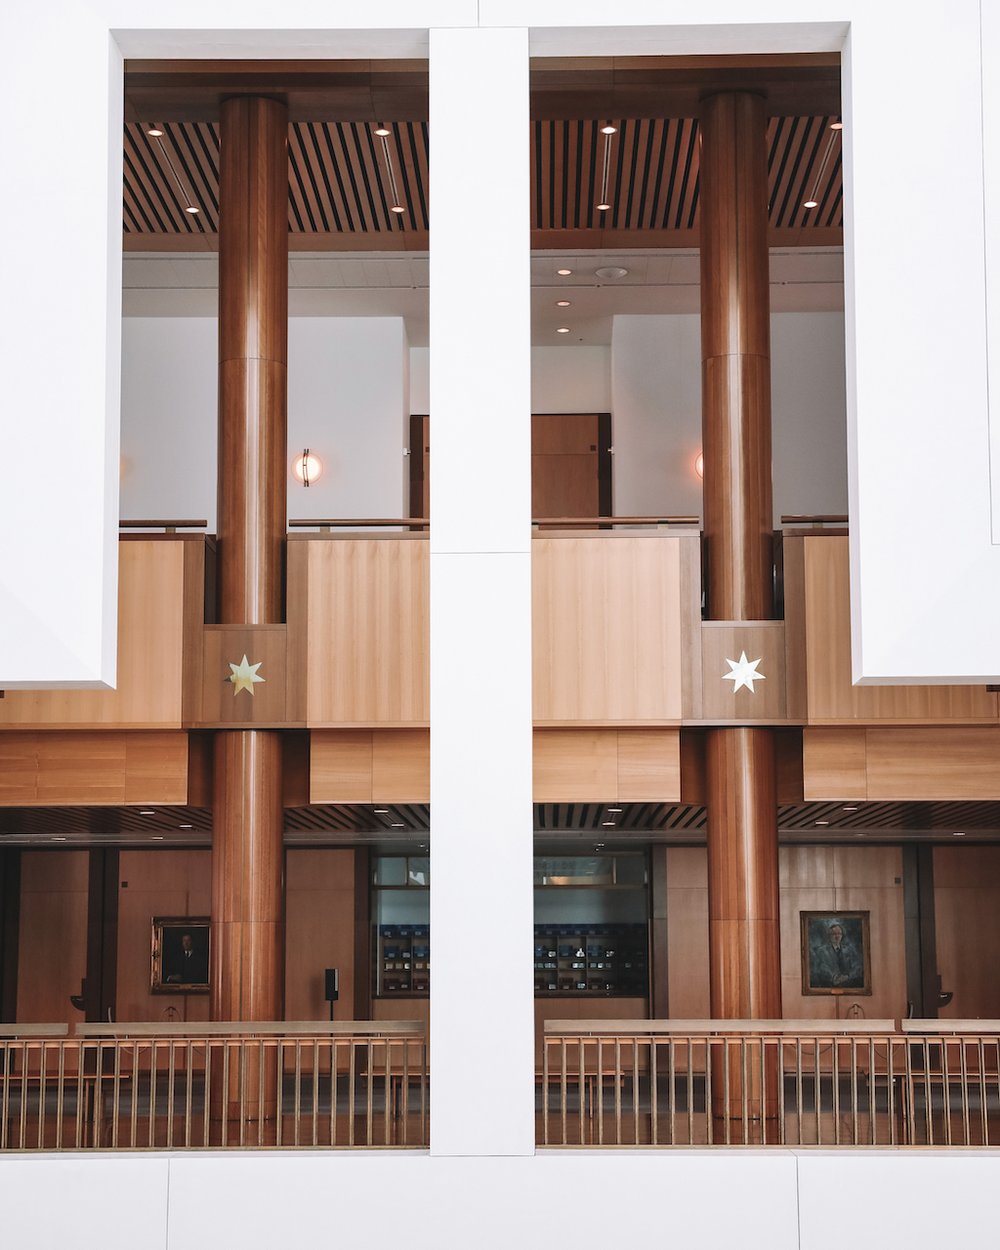 Symmetry - New Parliament House of Australia - Canberra - Australian Capital Territory - Australia